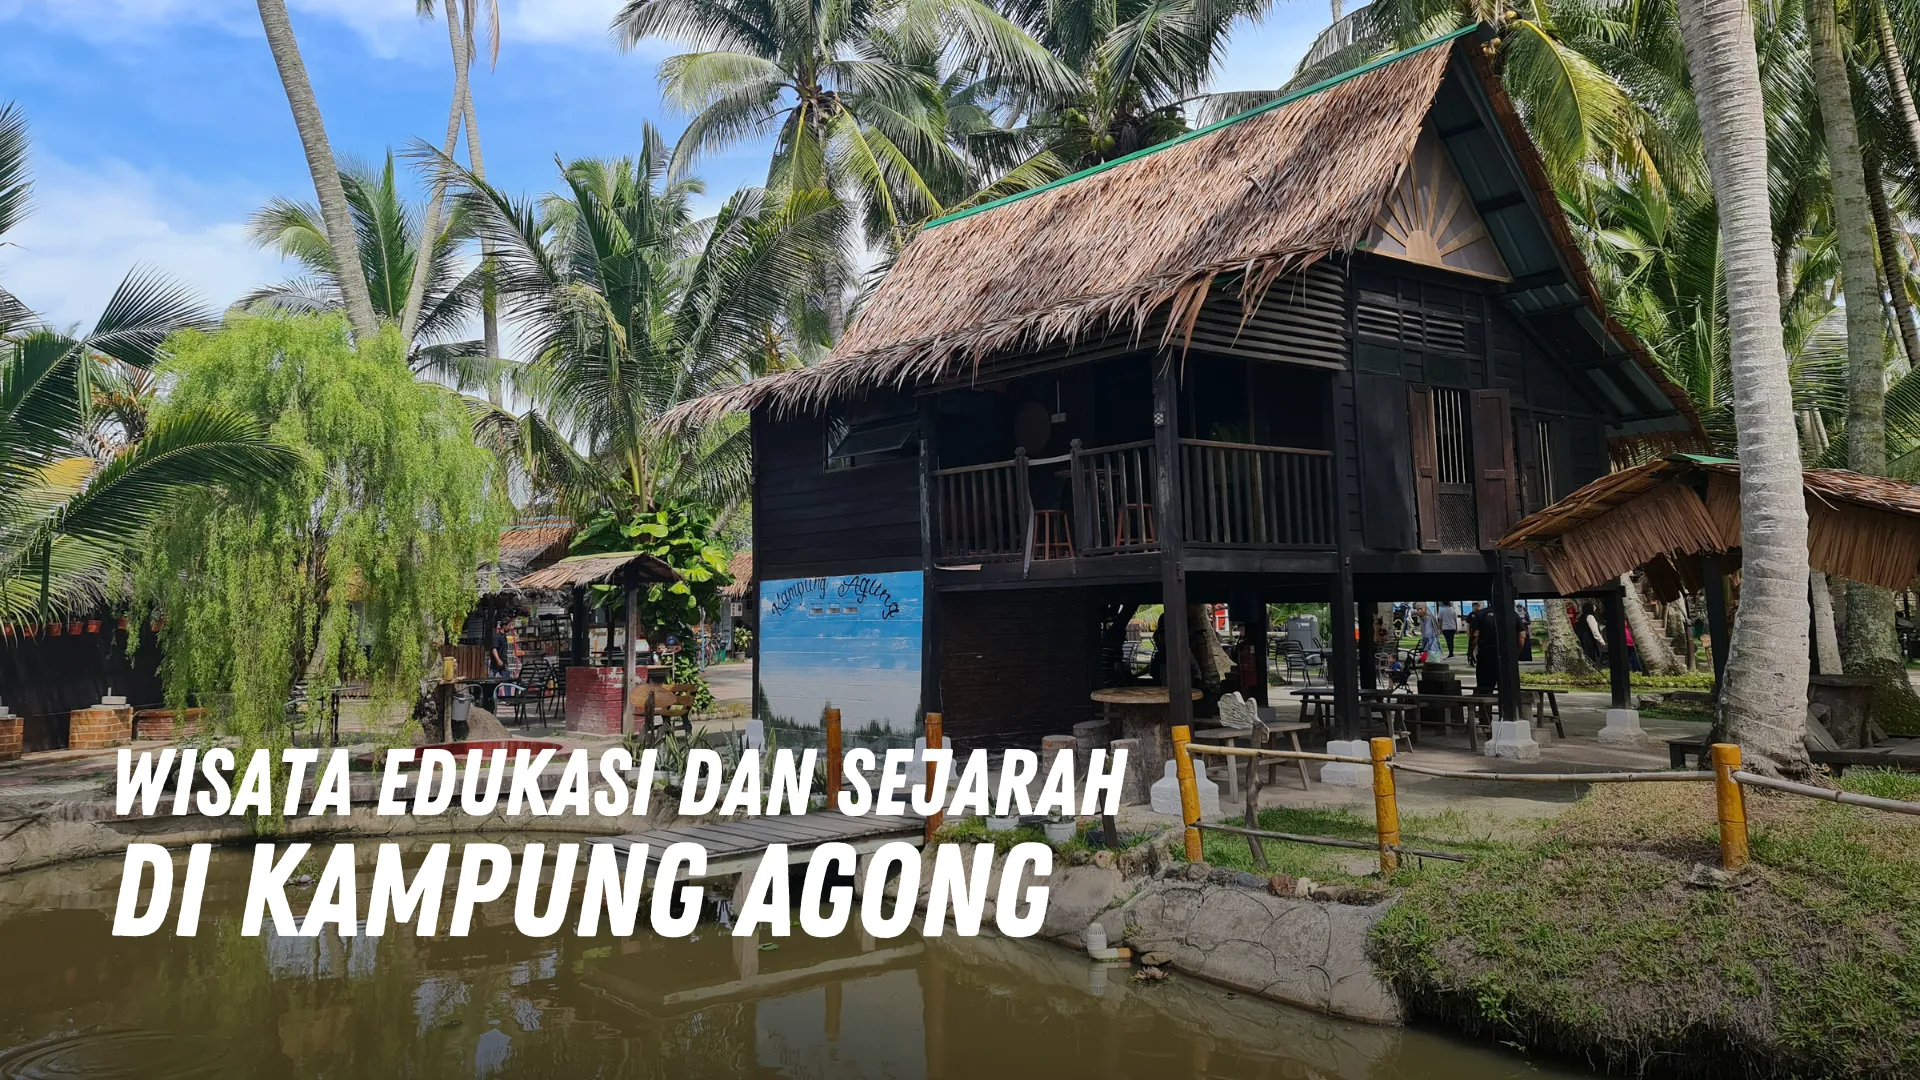 Wisata Edukasi dan Sejarah Di Kampung Agong Malaysia